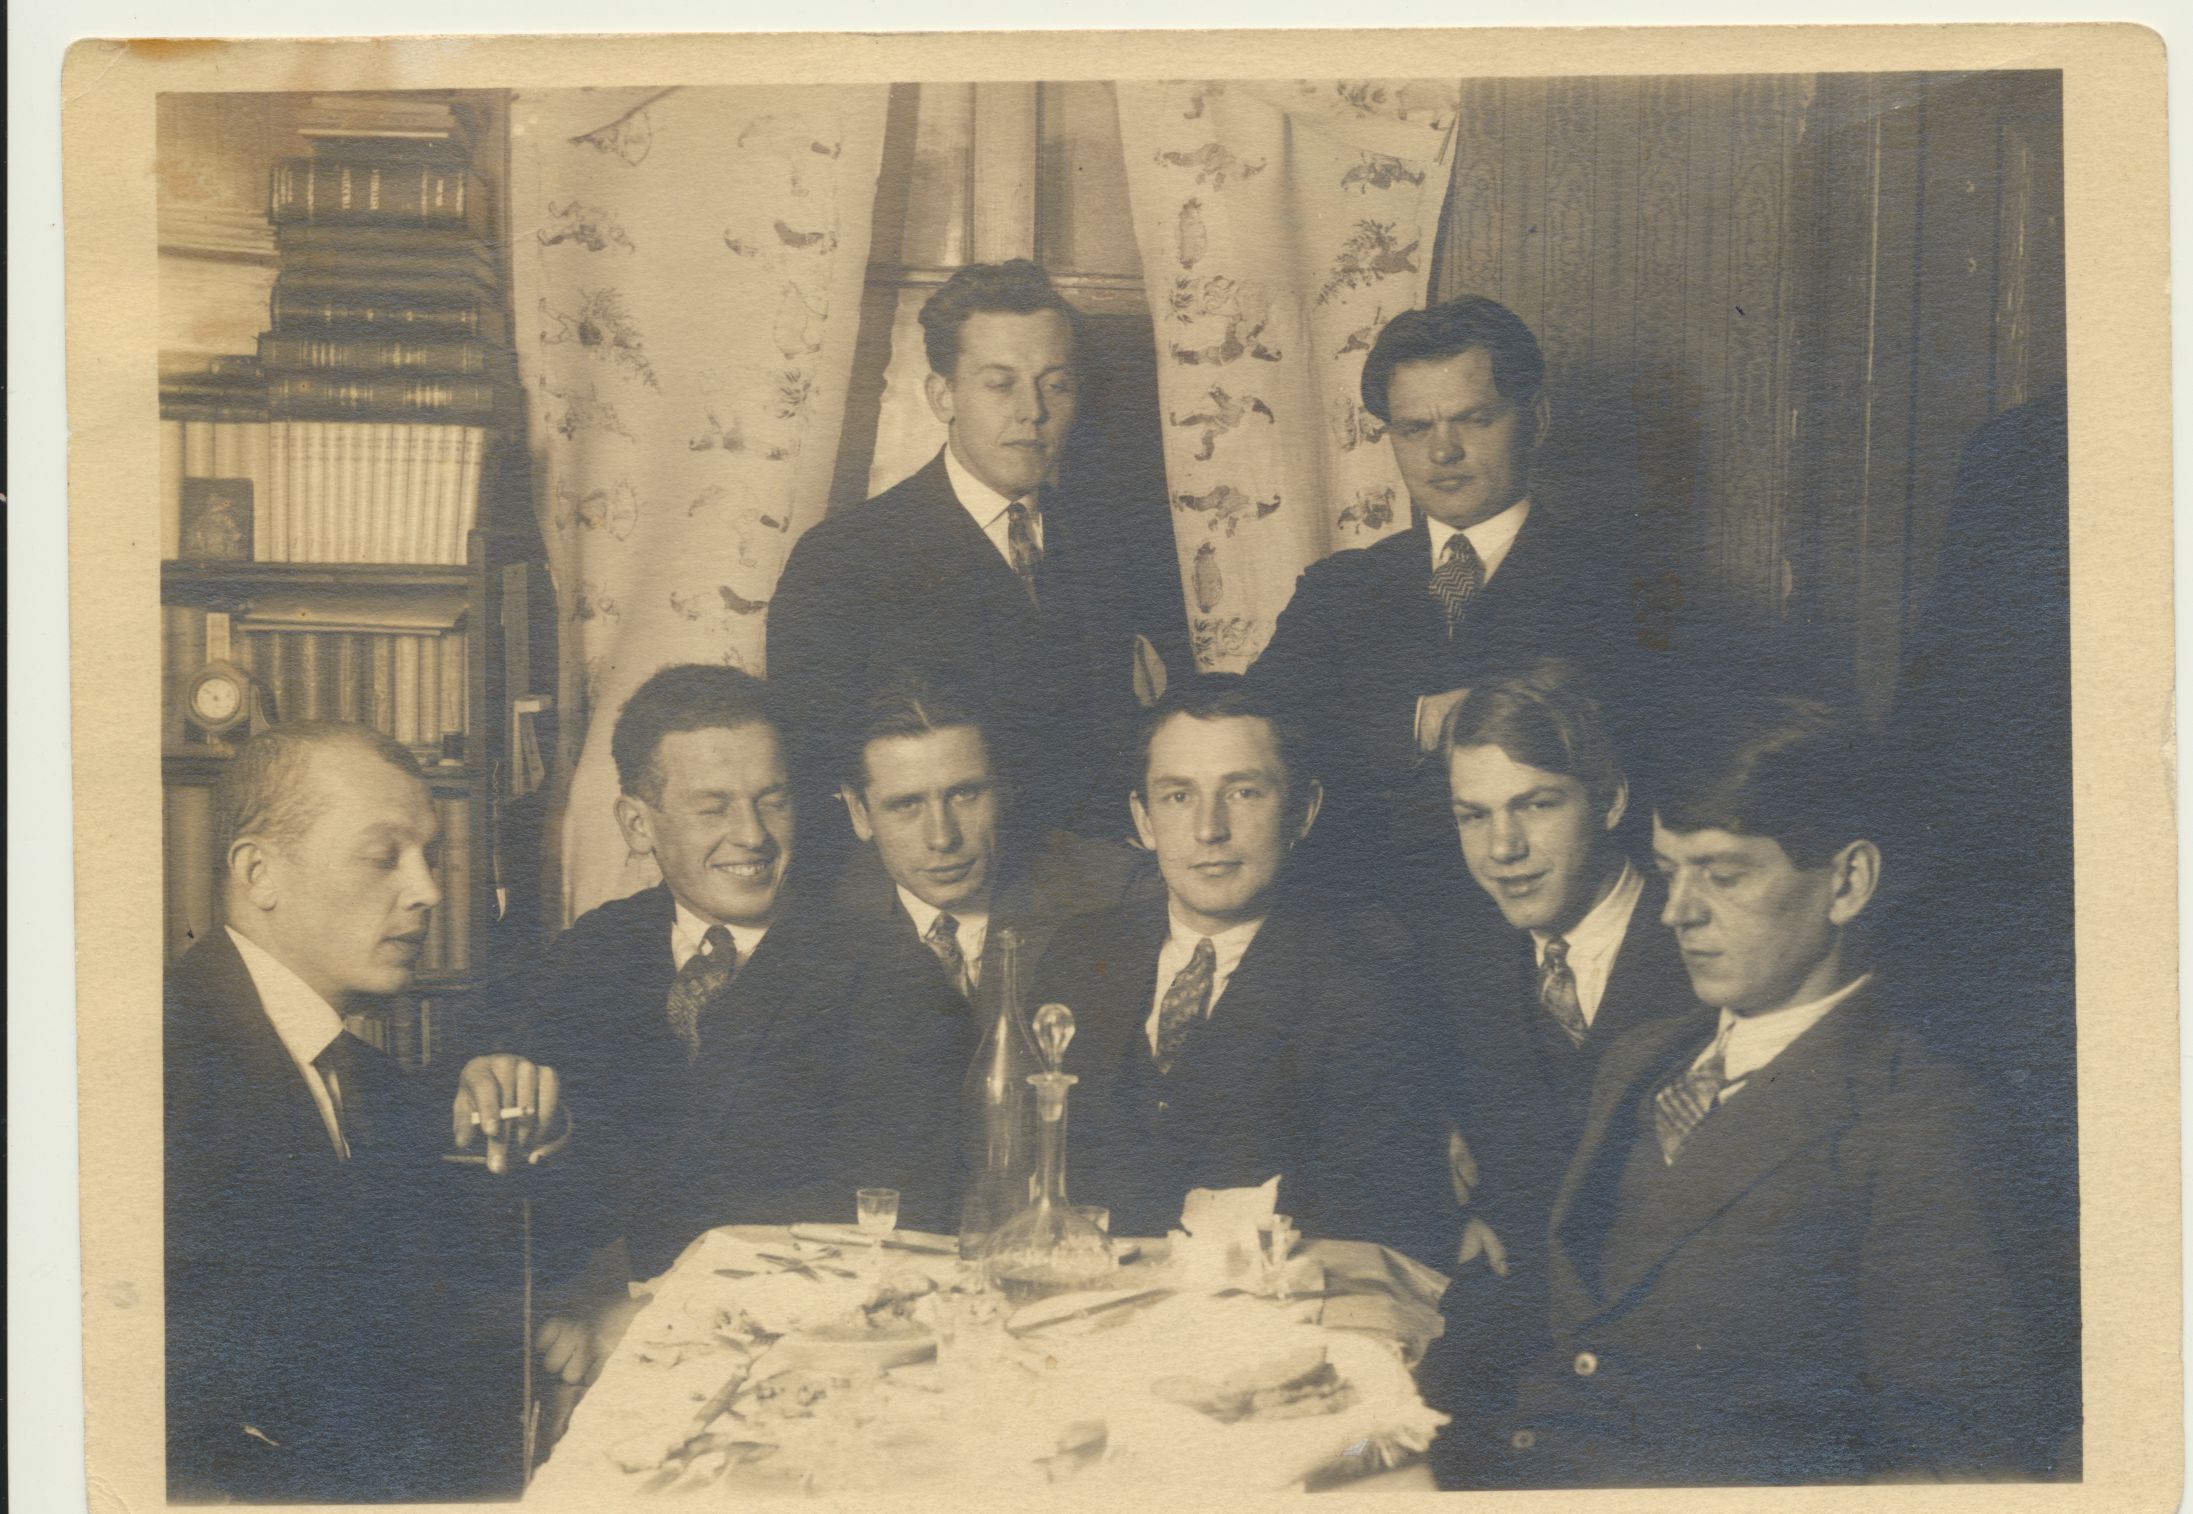 Keturvėjininkai pas K. Binkį. Iš kairės sėdi J. Ambrazevičius, T. Tilvytis, A. Braziulis, J. Petrėnas, A. Gerutis, K. Binkis. Stovi H. Kačinskas ir A. Gricius. Apie 1924 m.